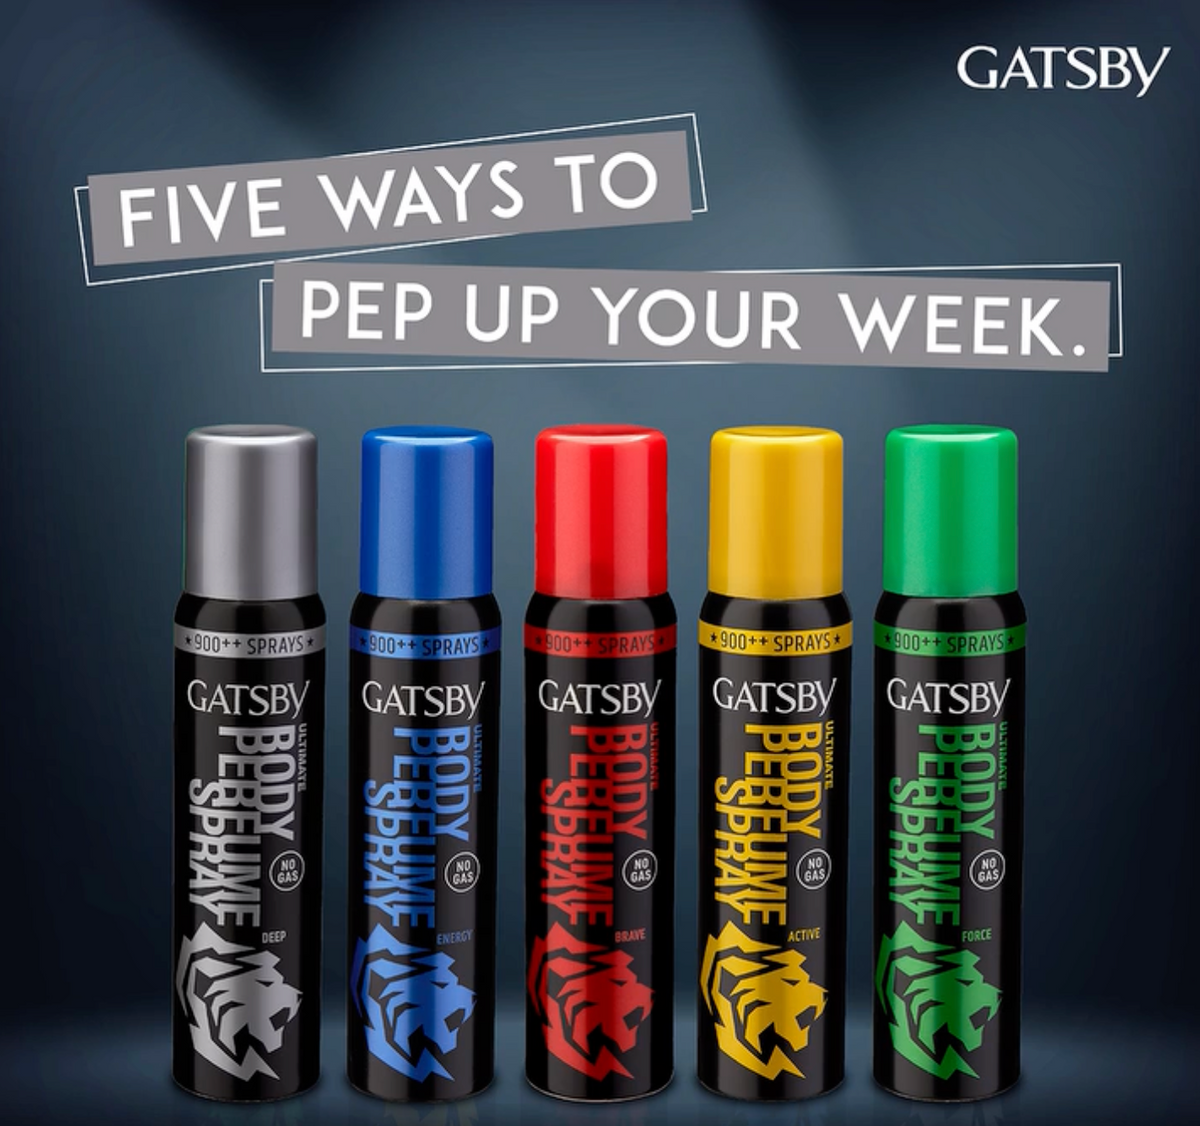 Gatsby Ultimate Body Perfume Spray - Deep, 120 ml : Buy 1 Get 1 Free! Gardenia Cosmotrade LLP